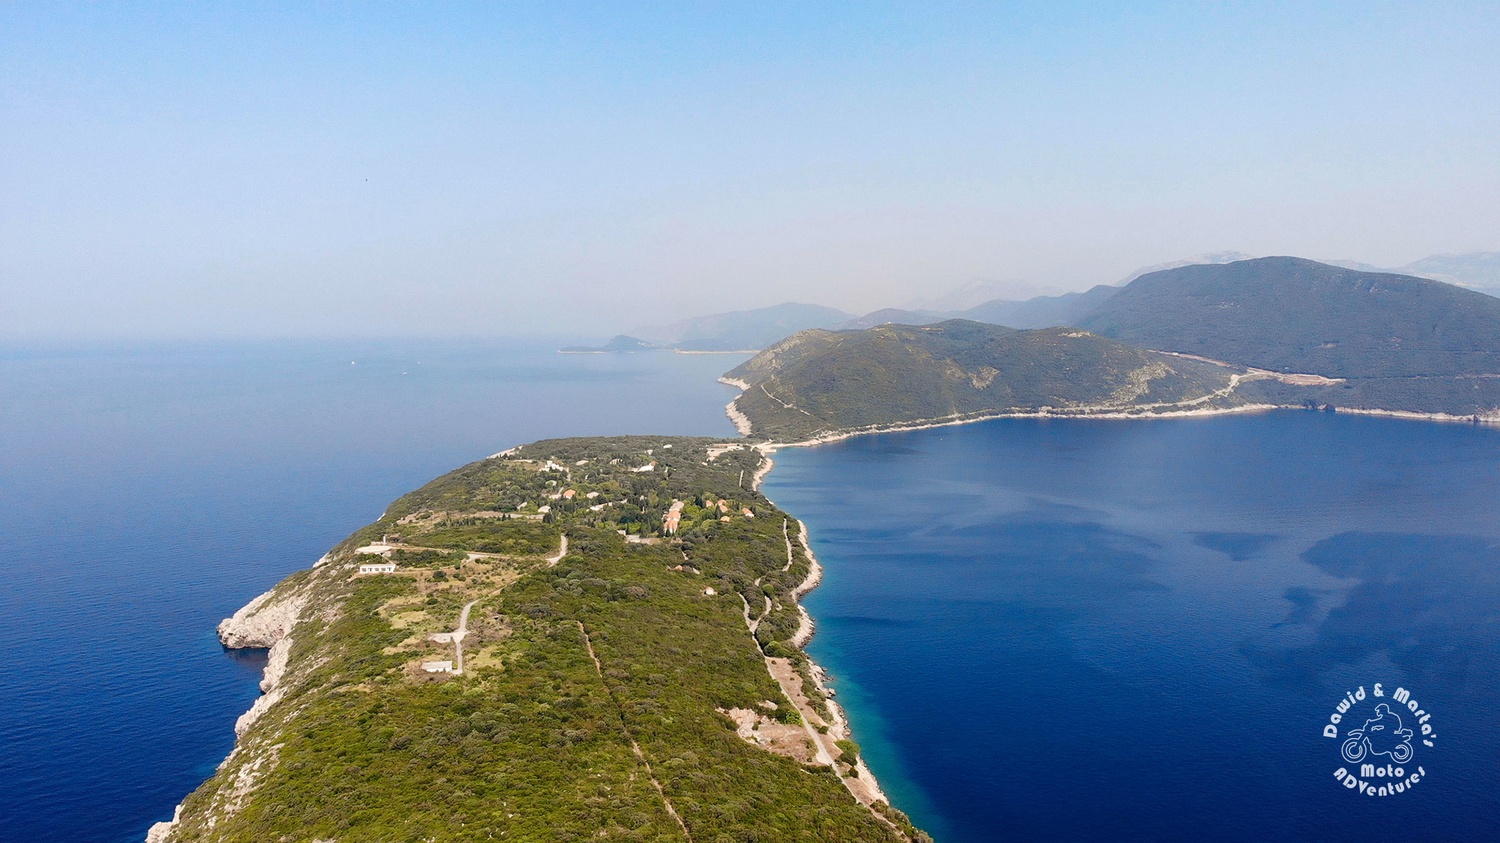 Prevlaka peninsula where it connects to Croatia mainland